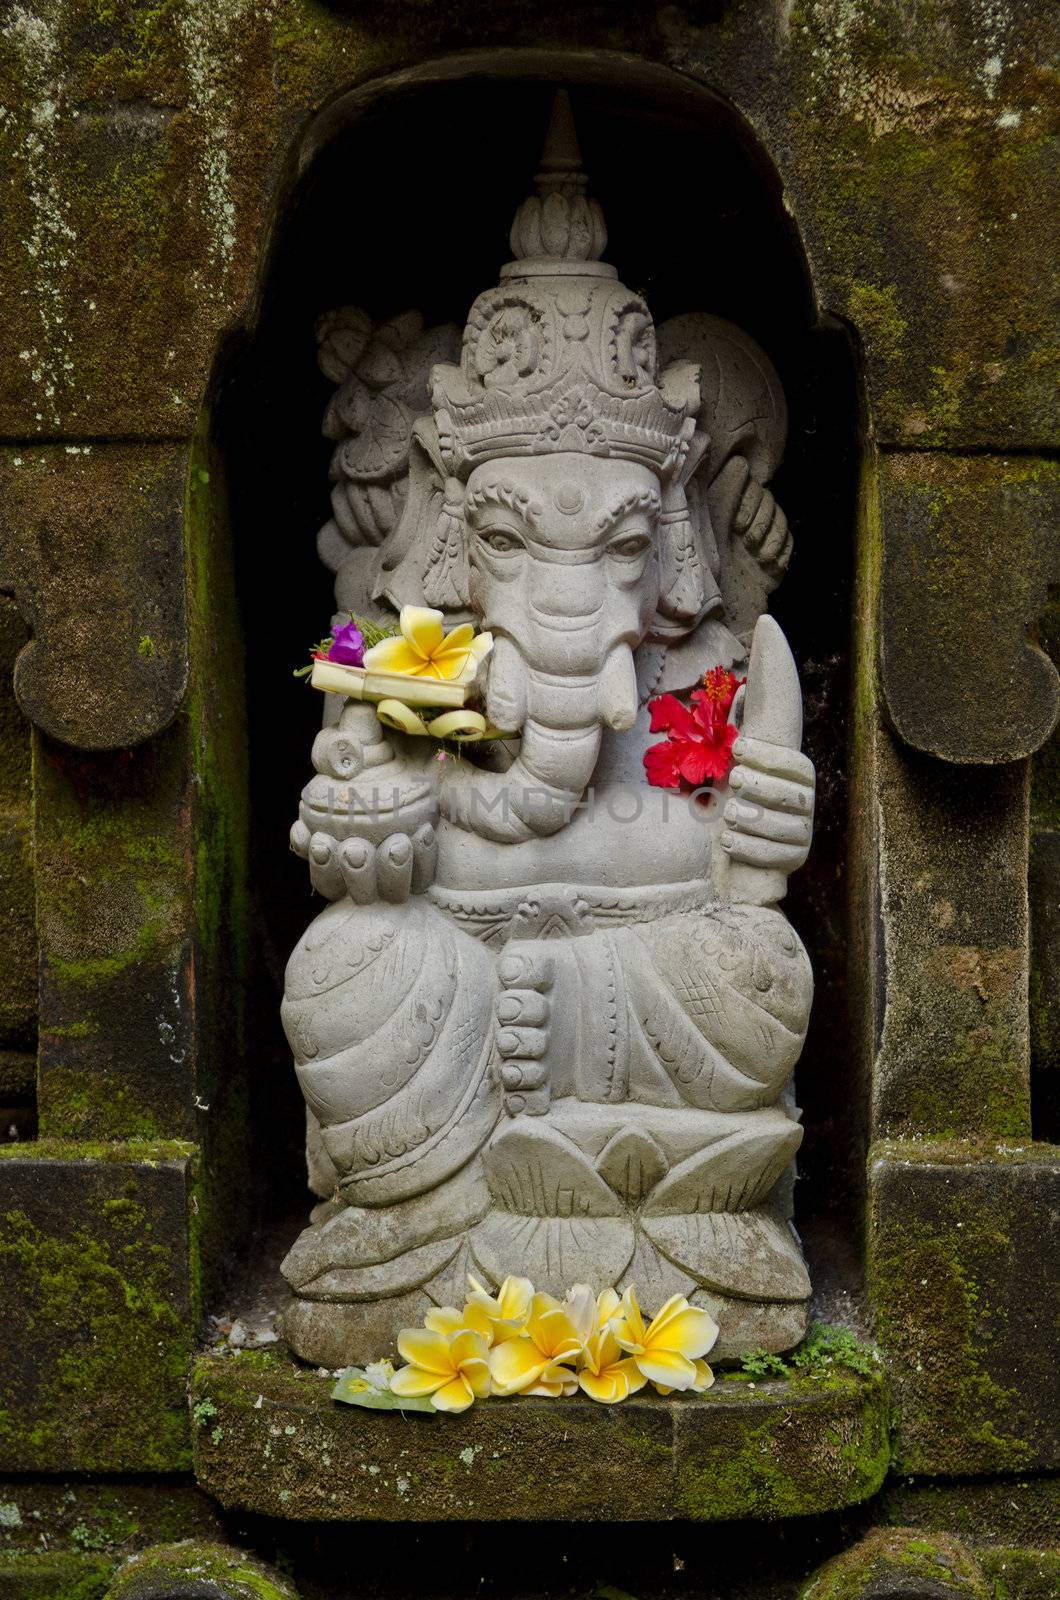 ganesh statue in bali indonesia temple